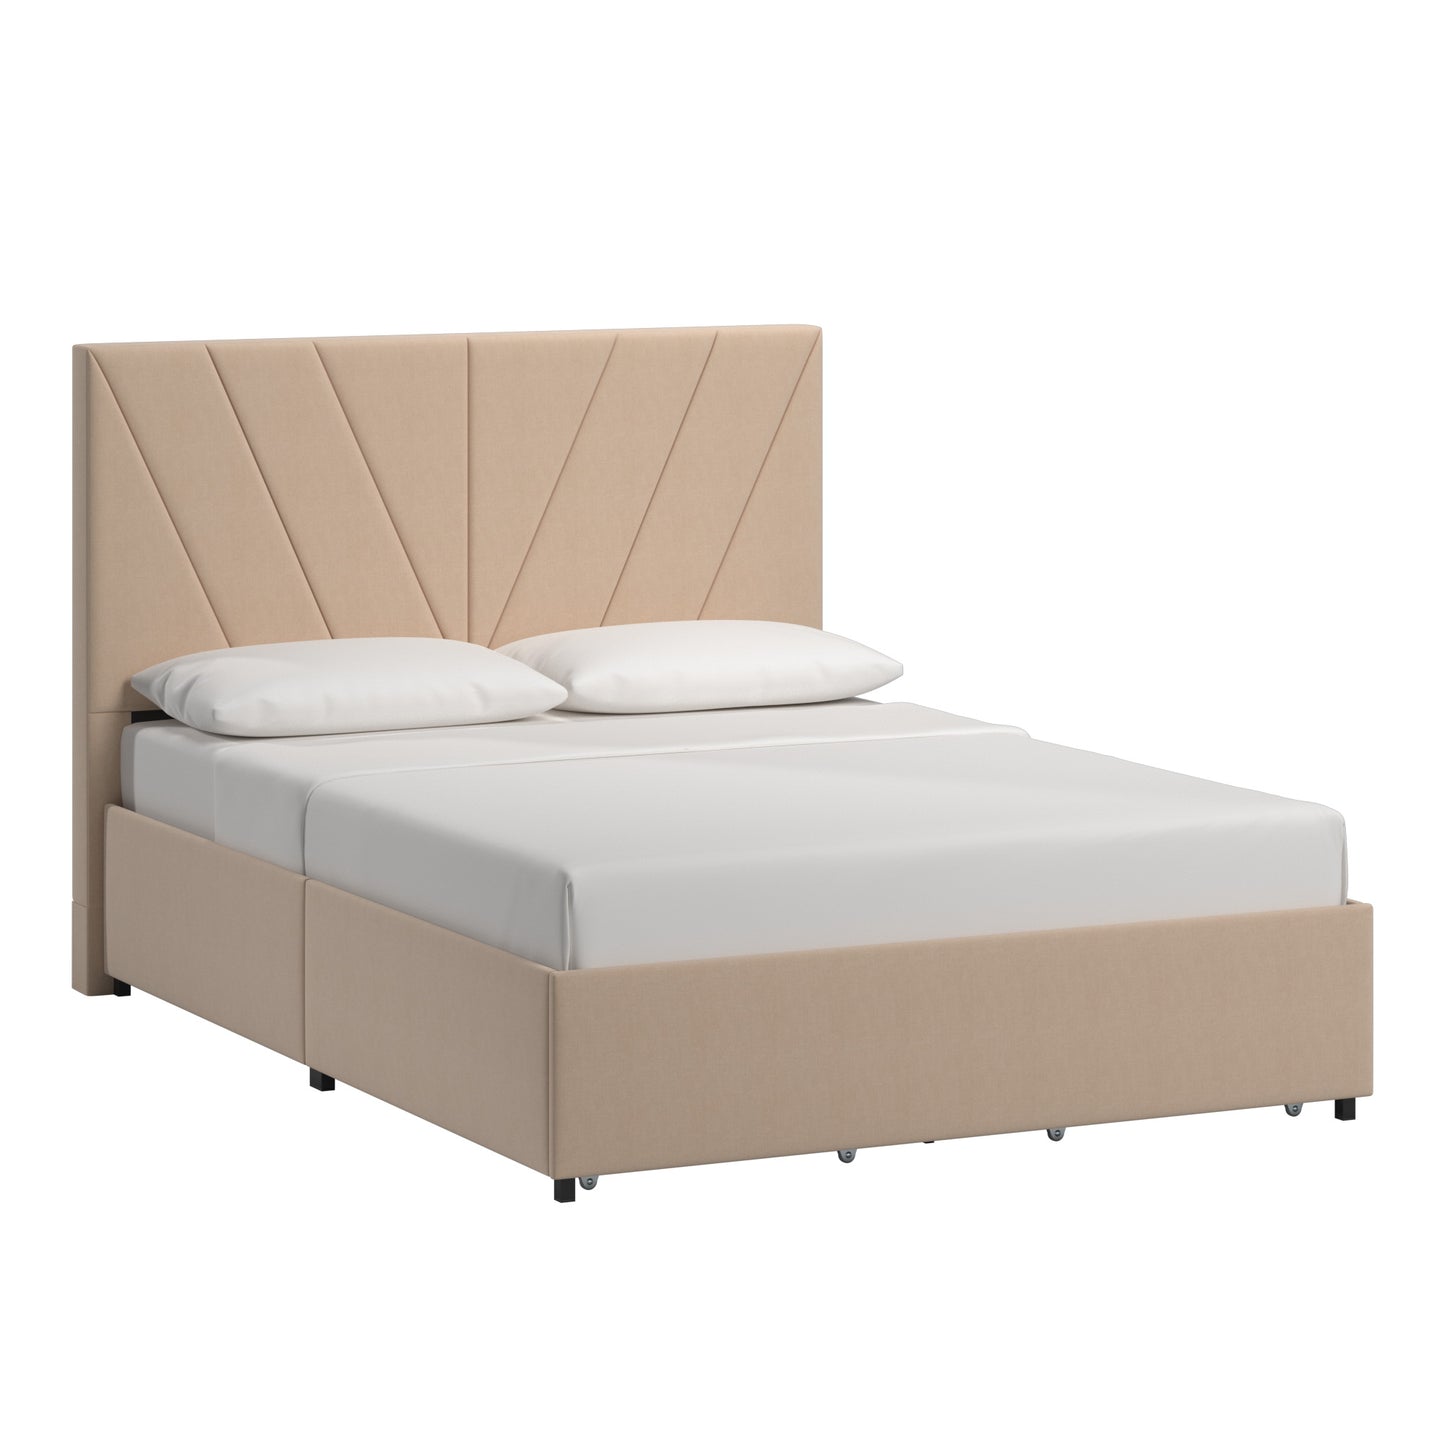 V-Channel Headboard Storage Platform Bed - Full Size (Full Size)